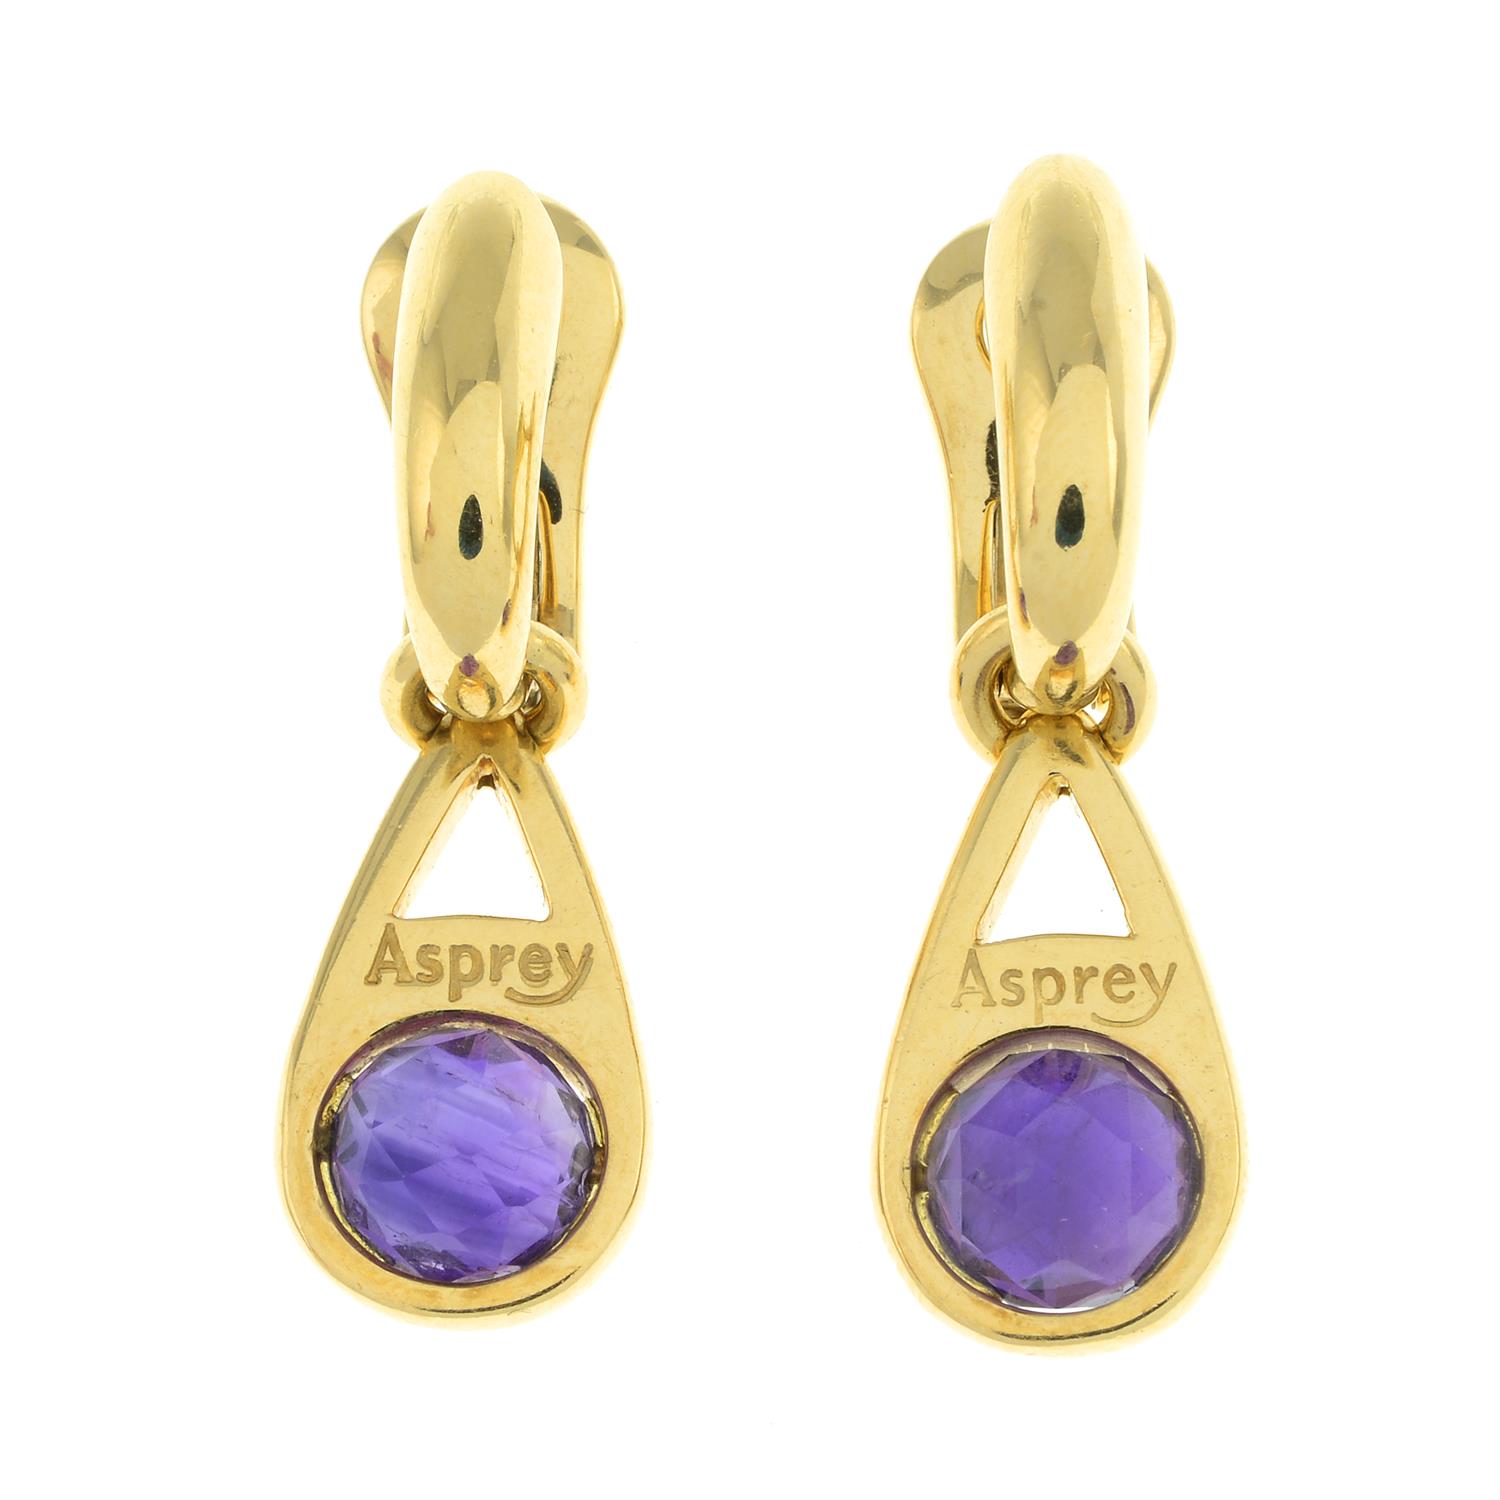 18ct gold amethyst earrings, by Asprey - Image 2 of 4